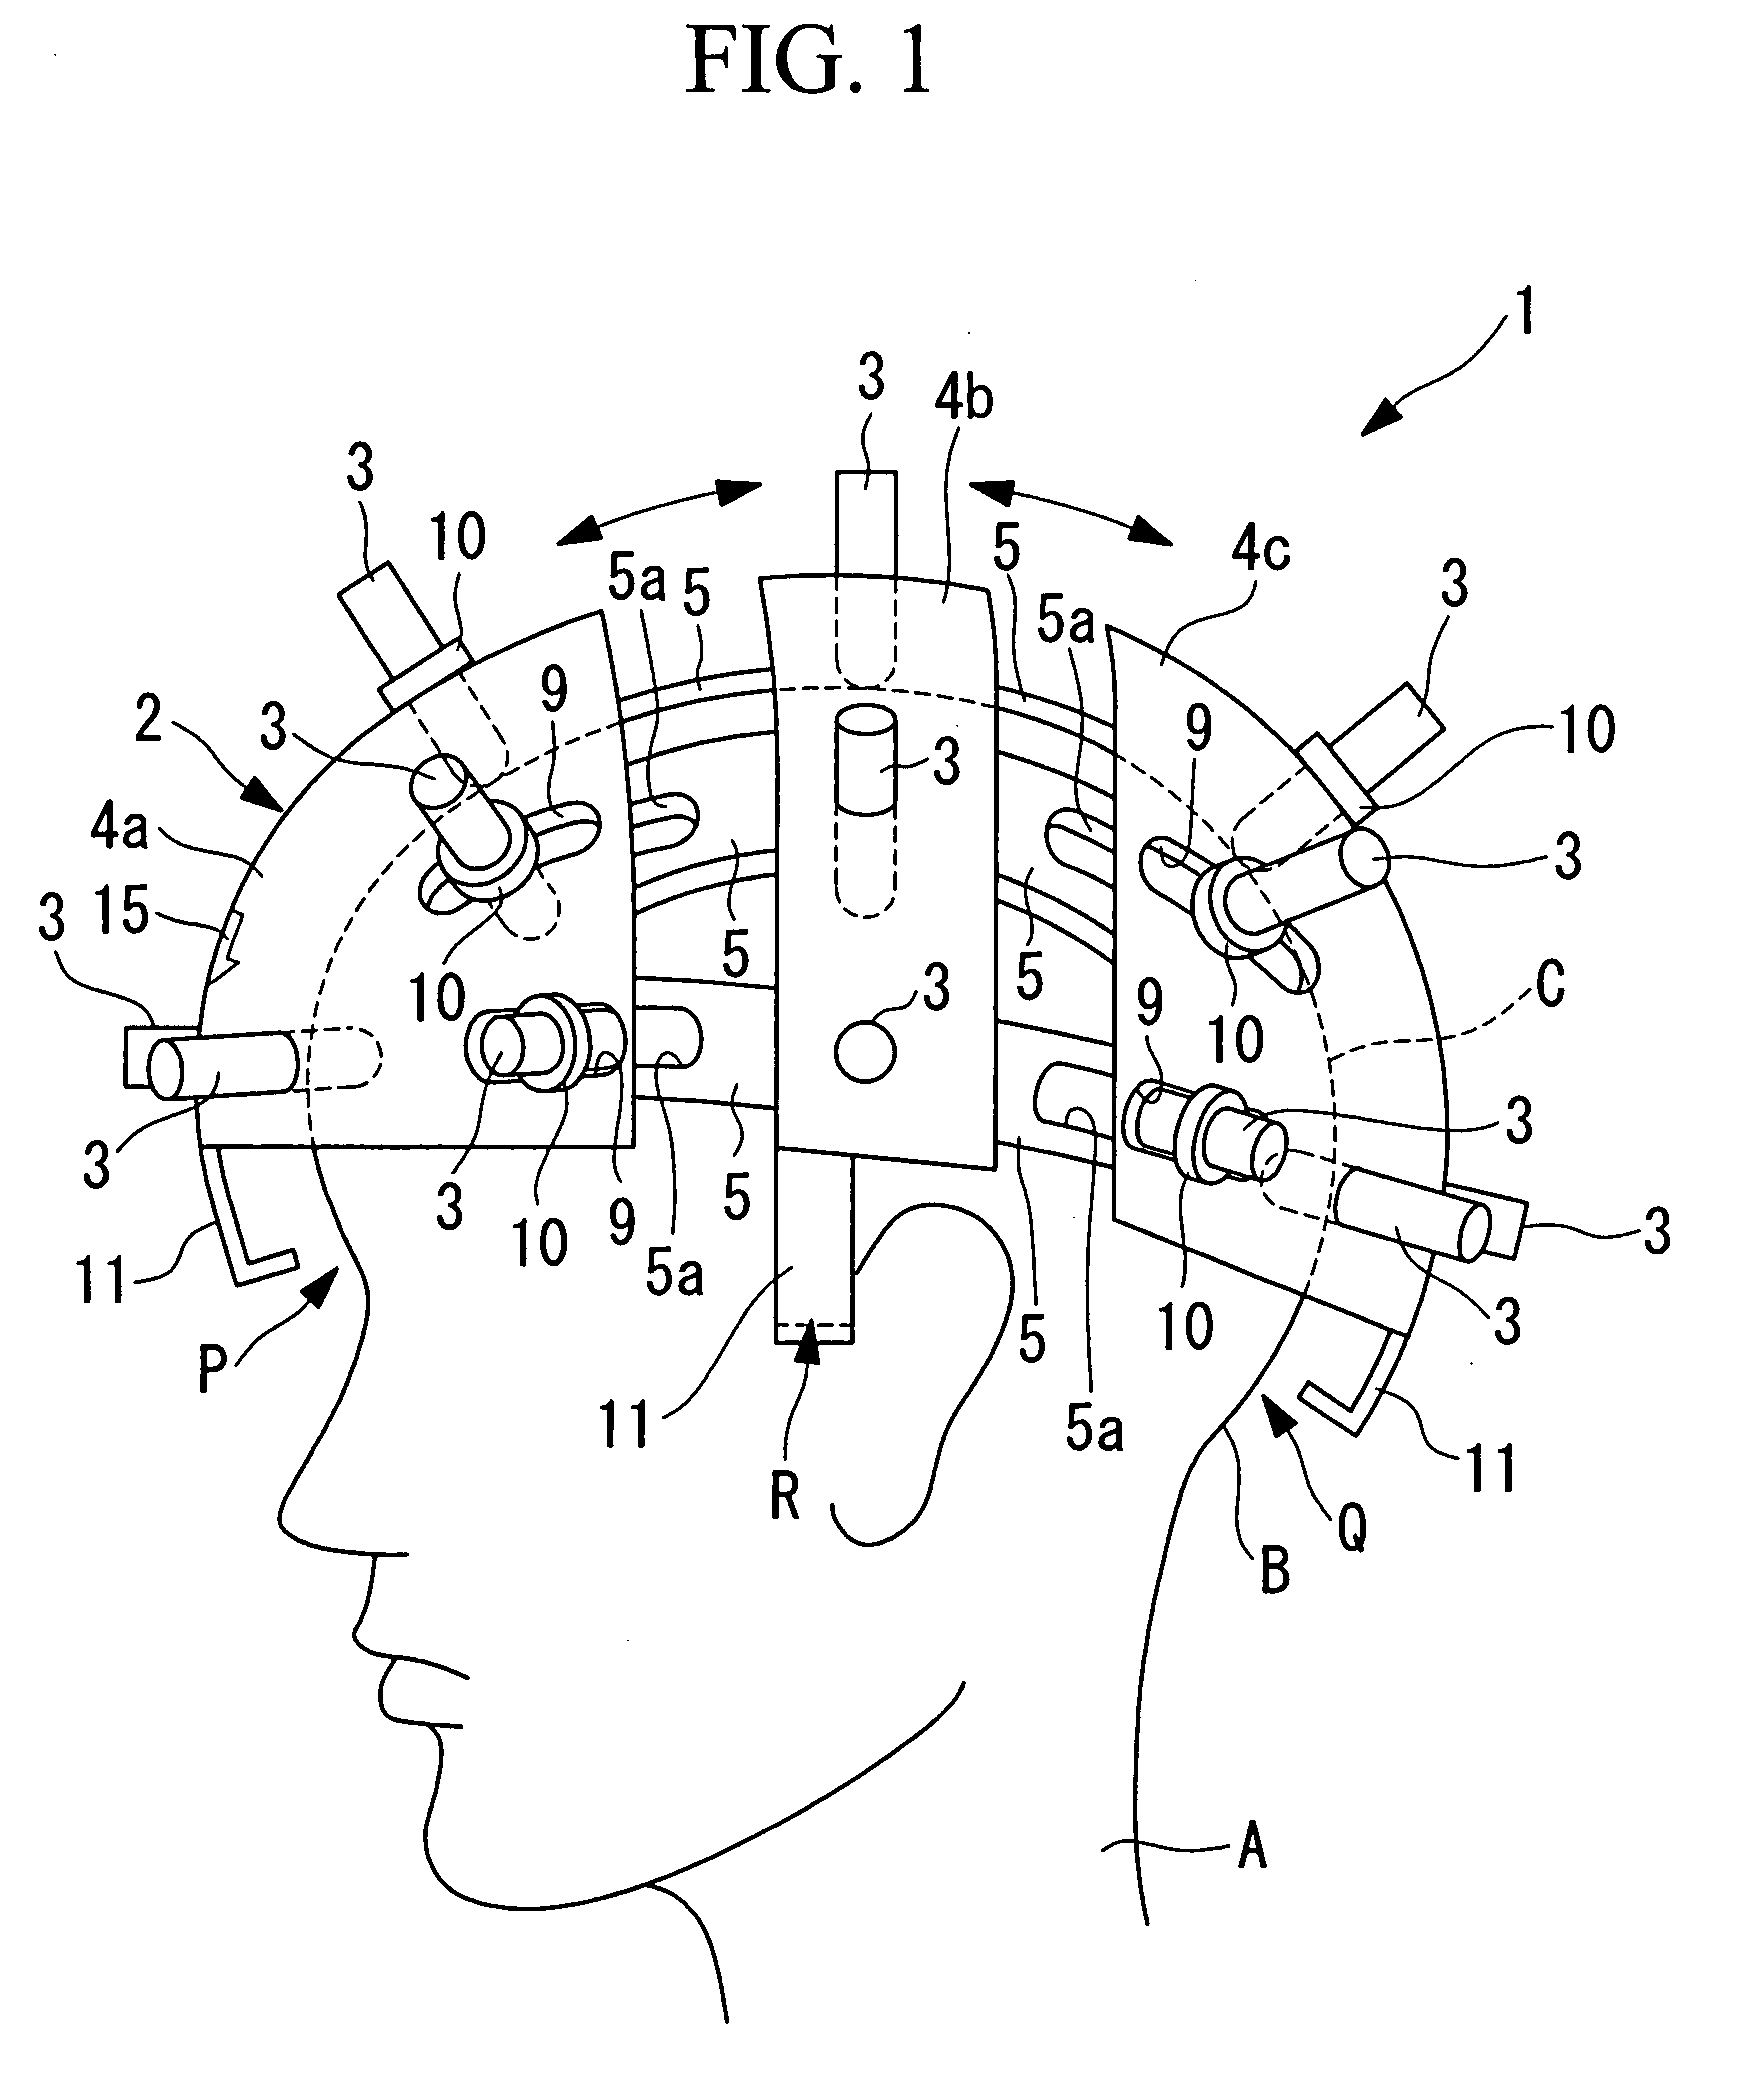 Apparatus for detecting brain function